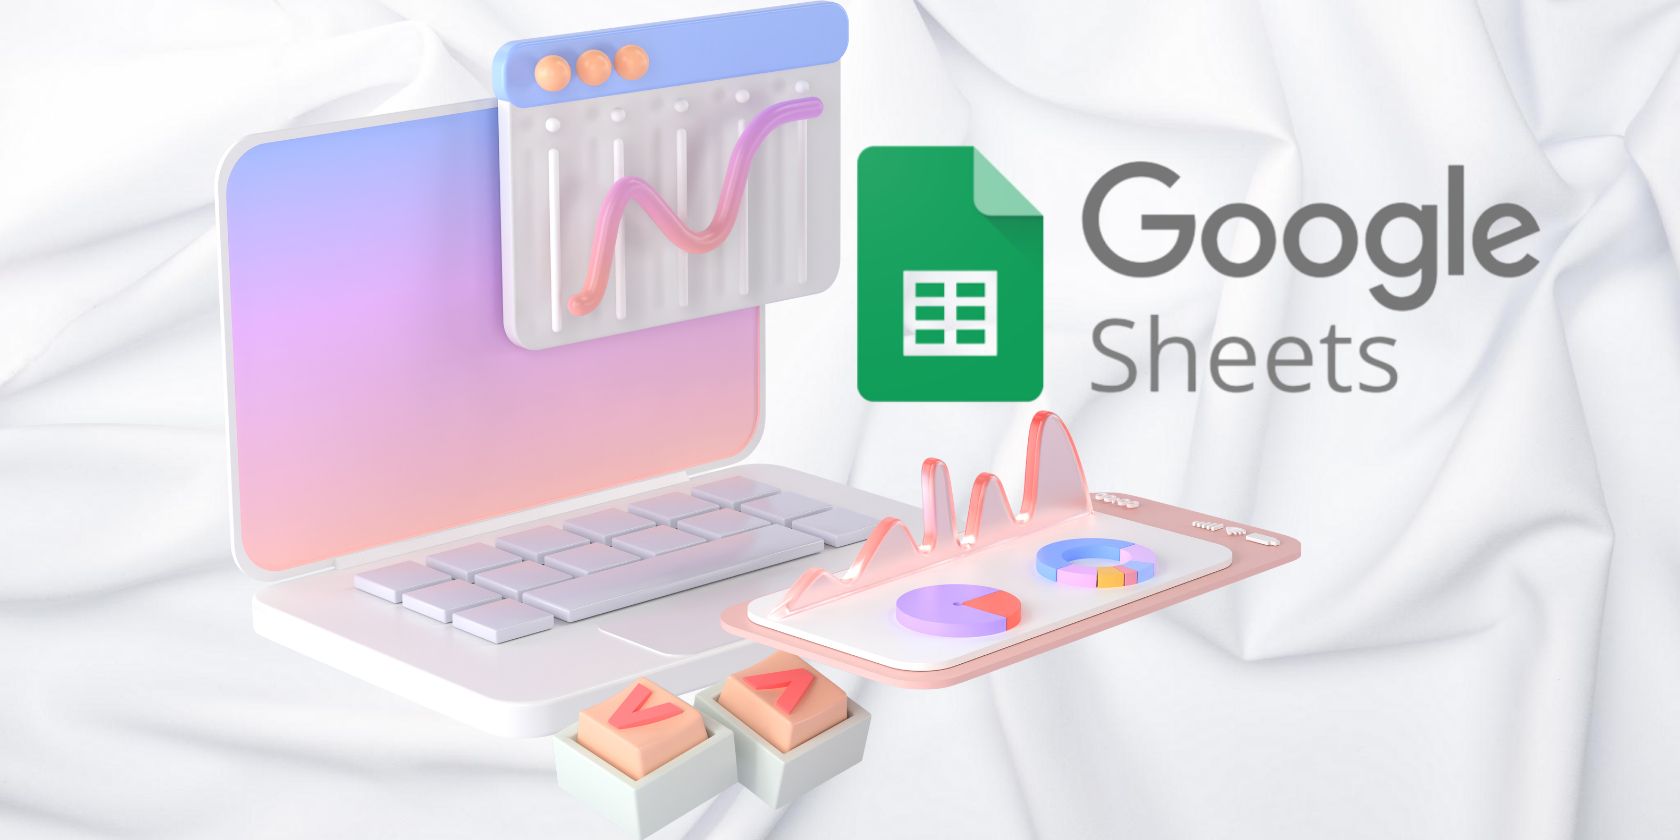 An illustration of laptop, data, visualization, and Google Logo